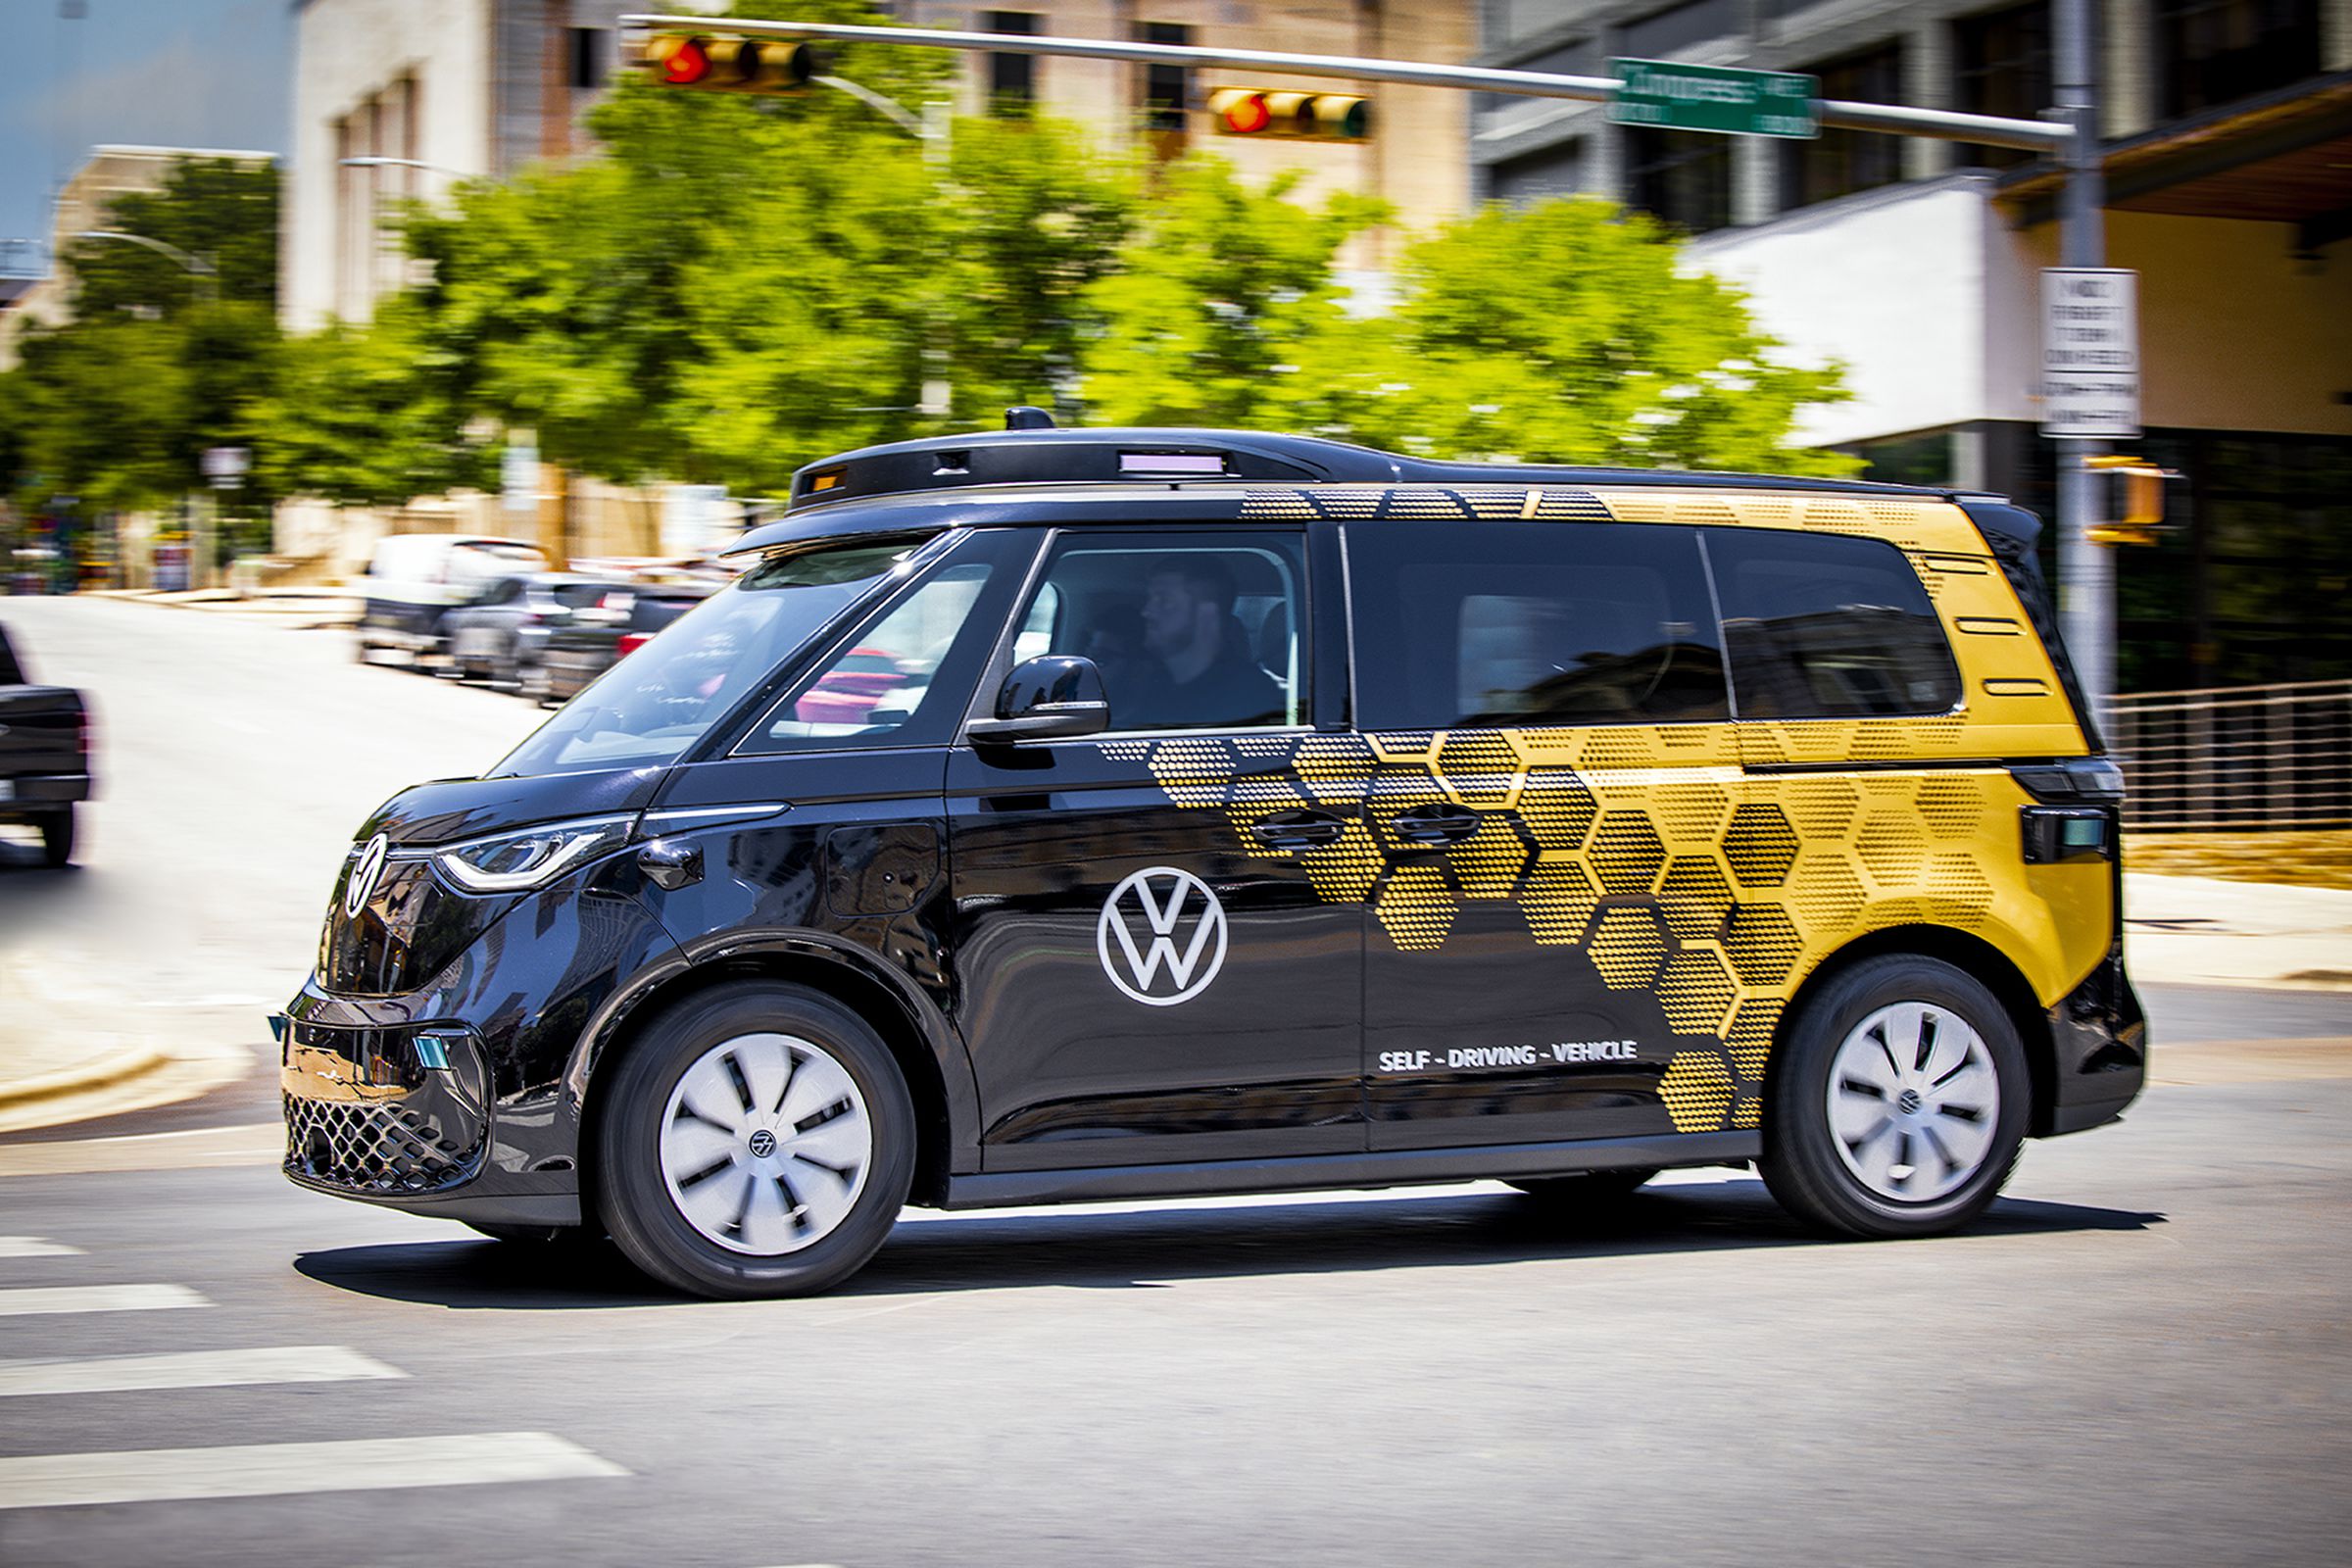 VW ID Buzz autonomous vehicle